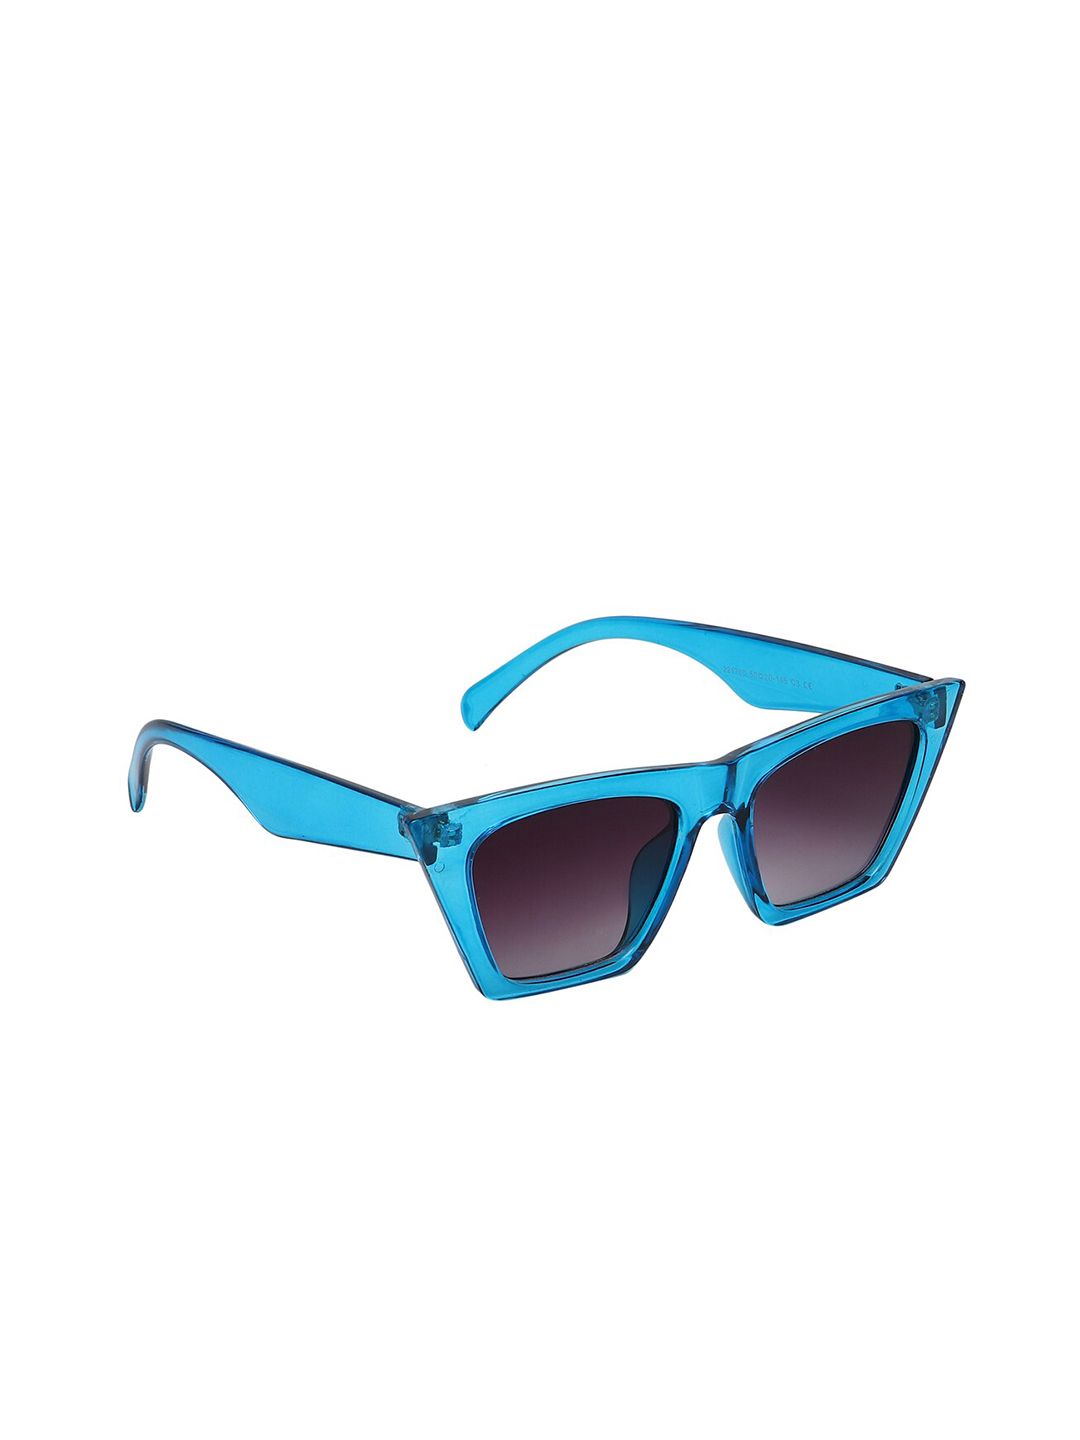 ALIGATORR Unisex Black Lens & Blue Wayfarer Sunglasses with UV Protected Lens Price in India